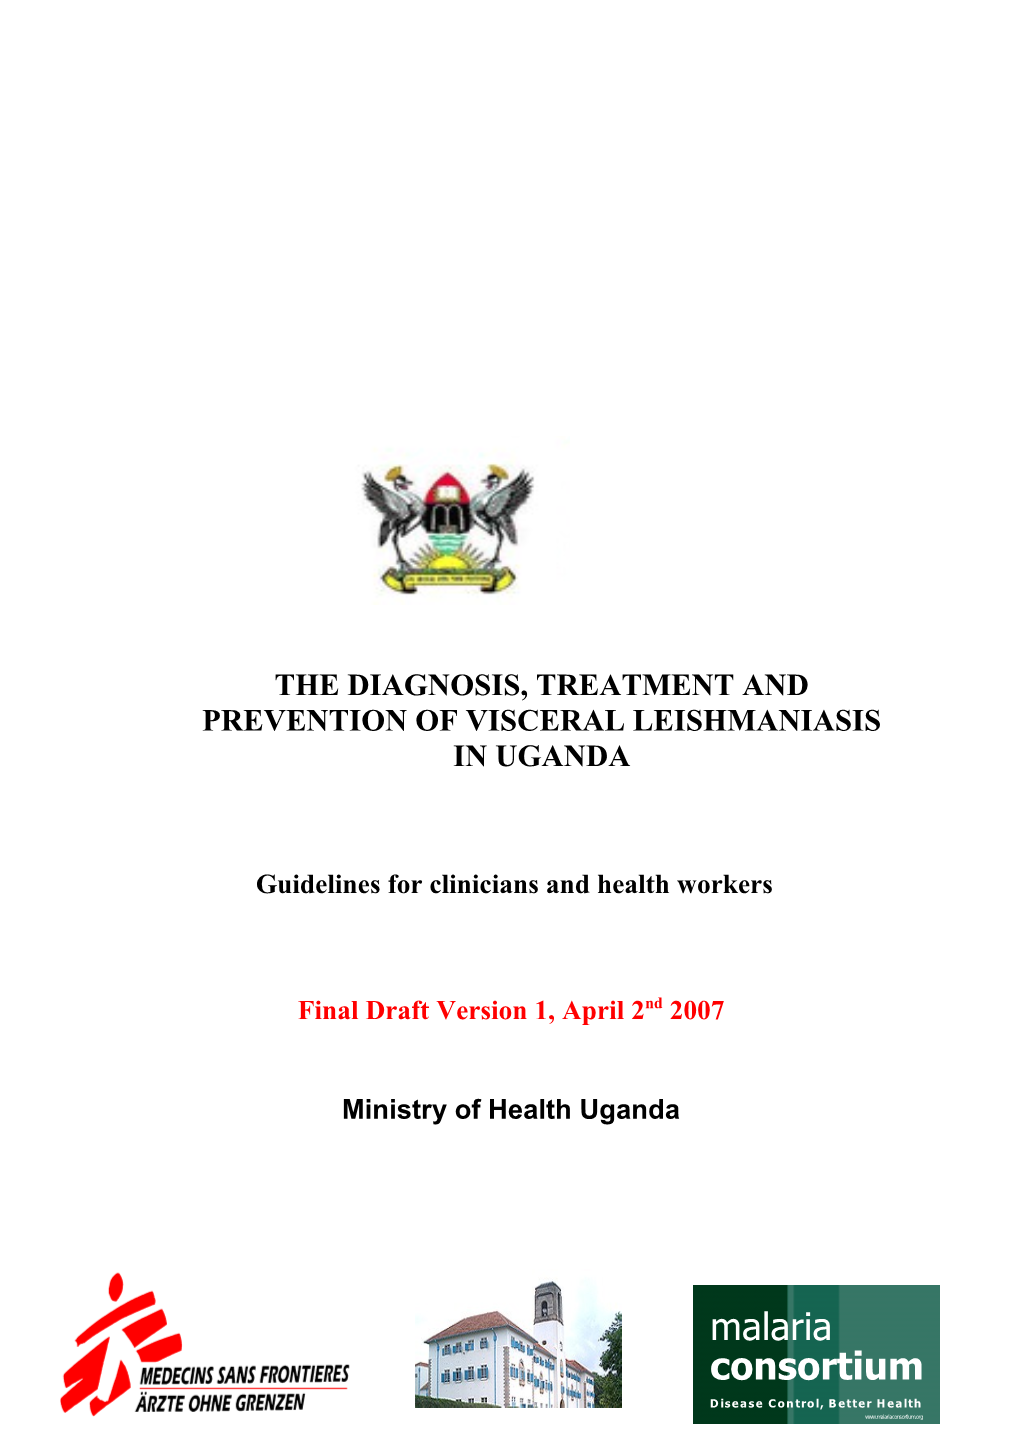 The Diagnosis & Treatment of Visceral Leishmaniasis in Uganda